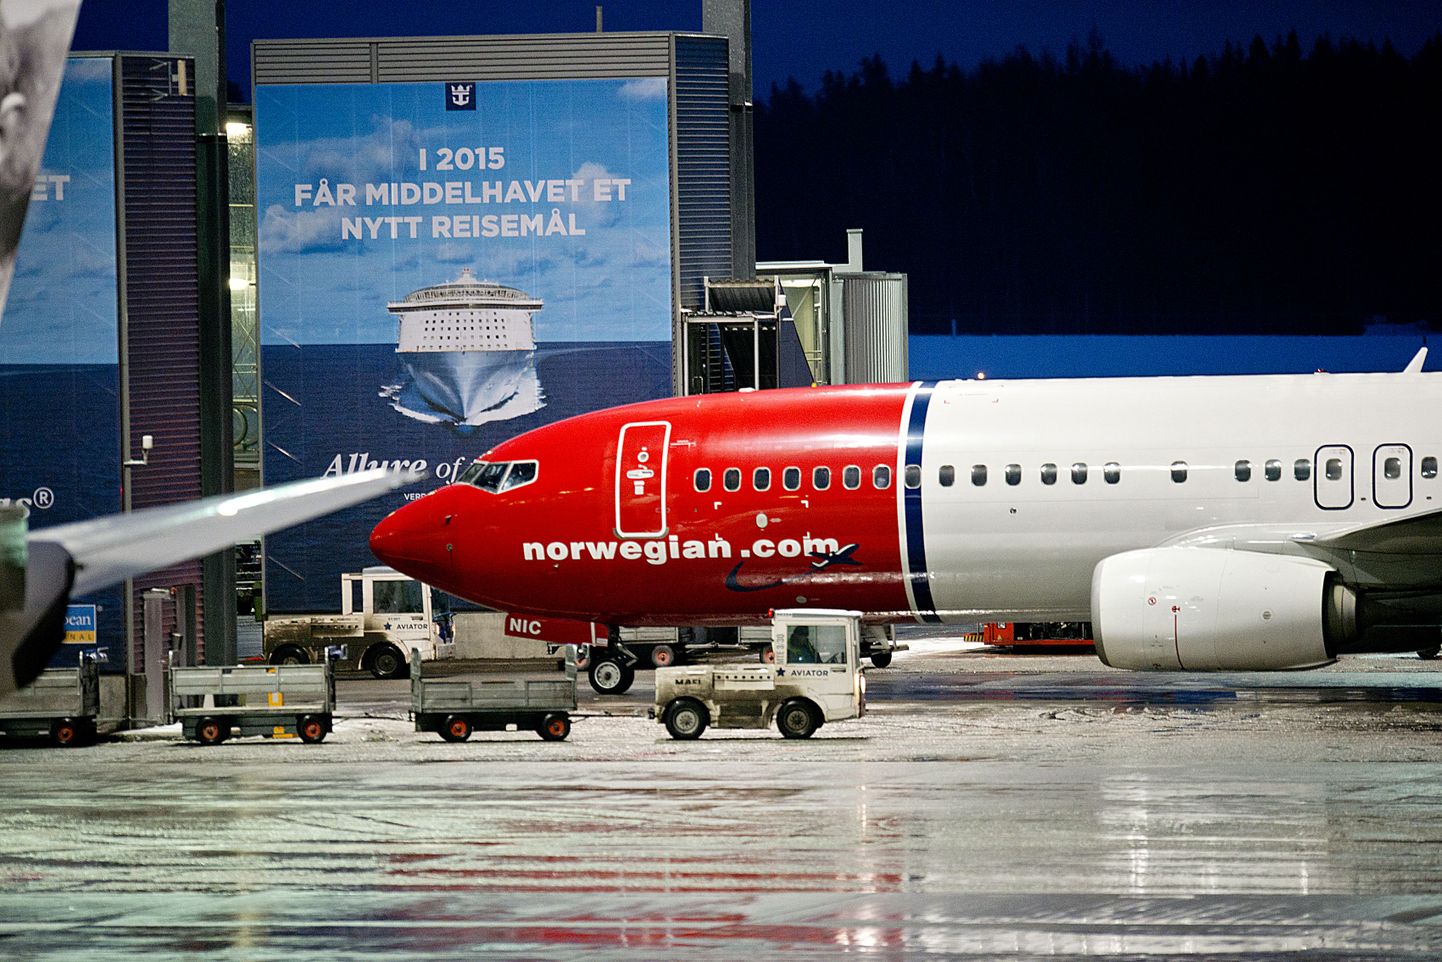 Lennukompanii Norwegian Air lennuk Oslo lennuväljal.